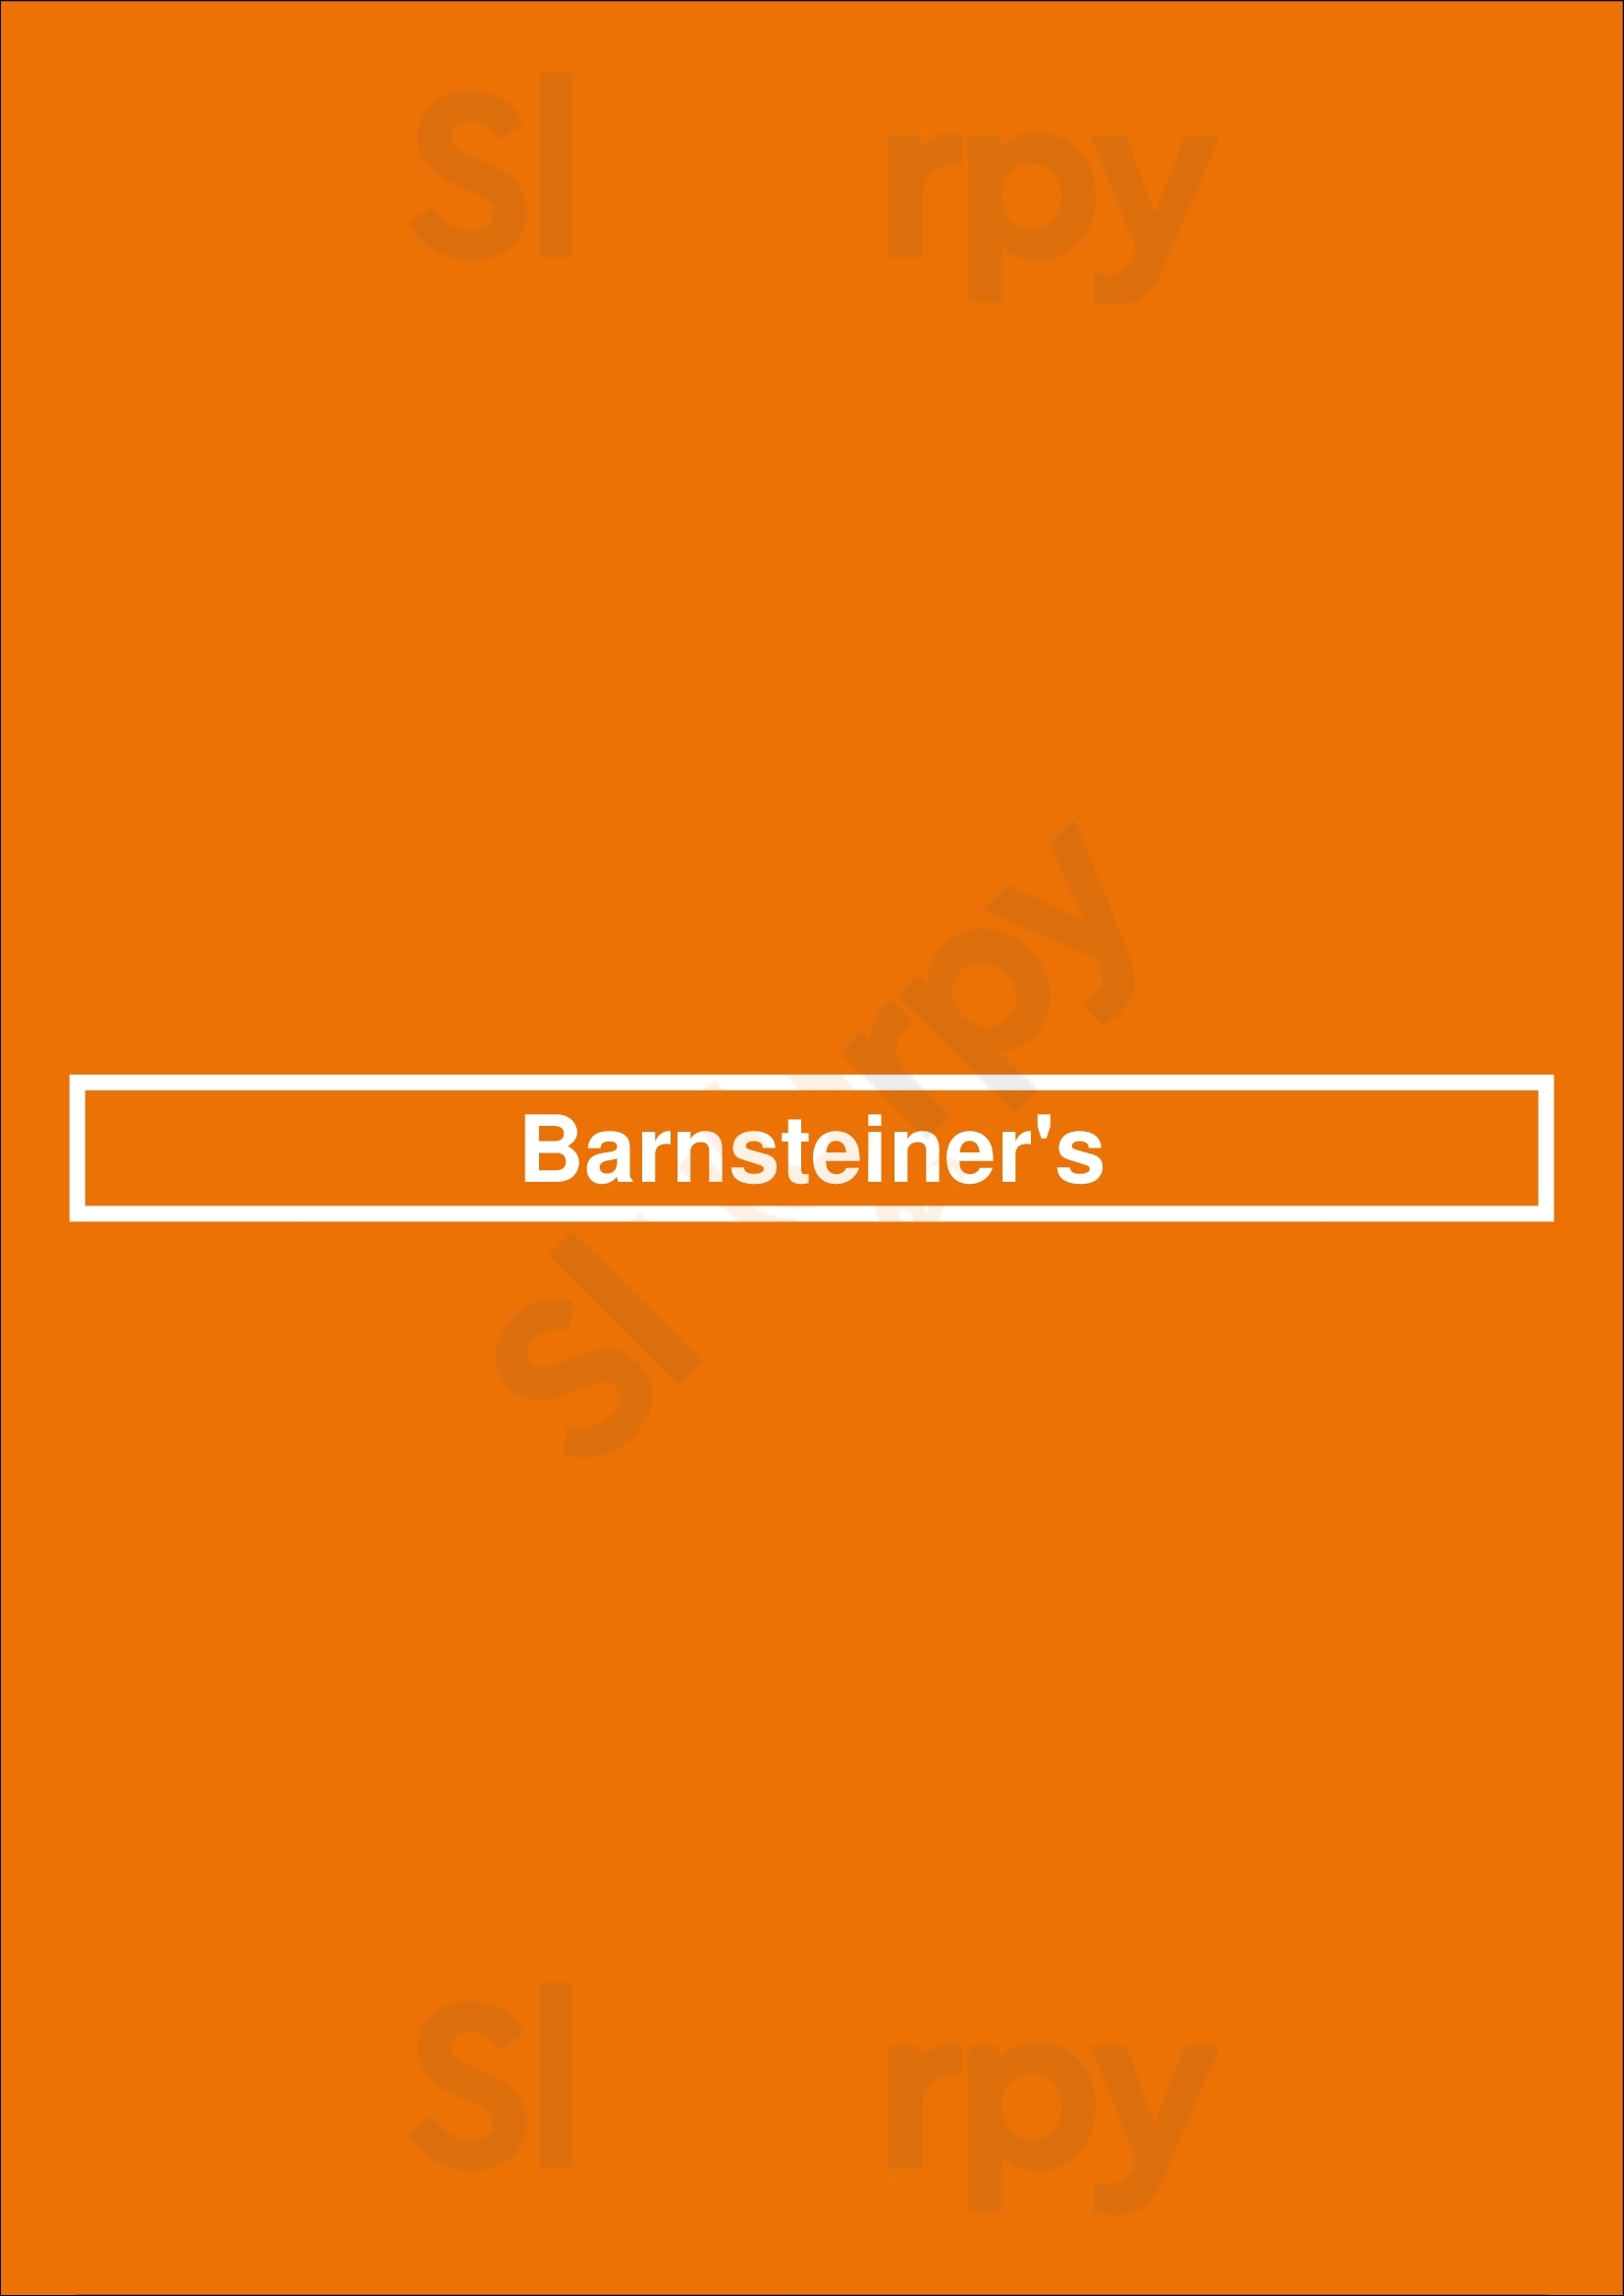 Barnsteiner's Toronto Menu - 1